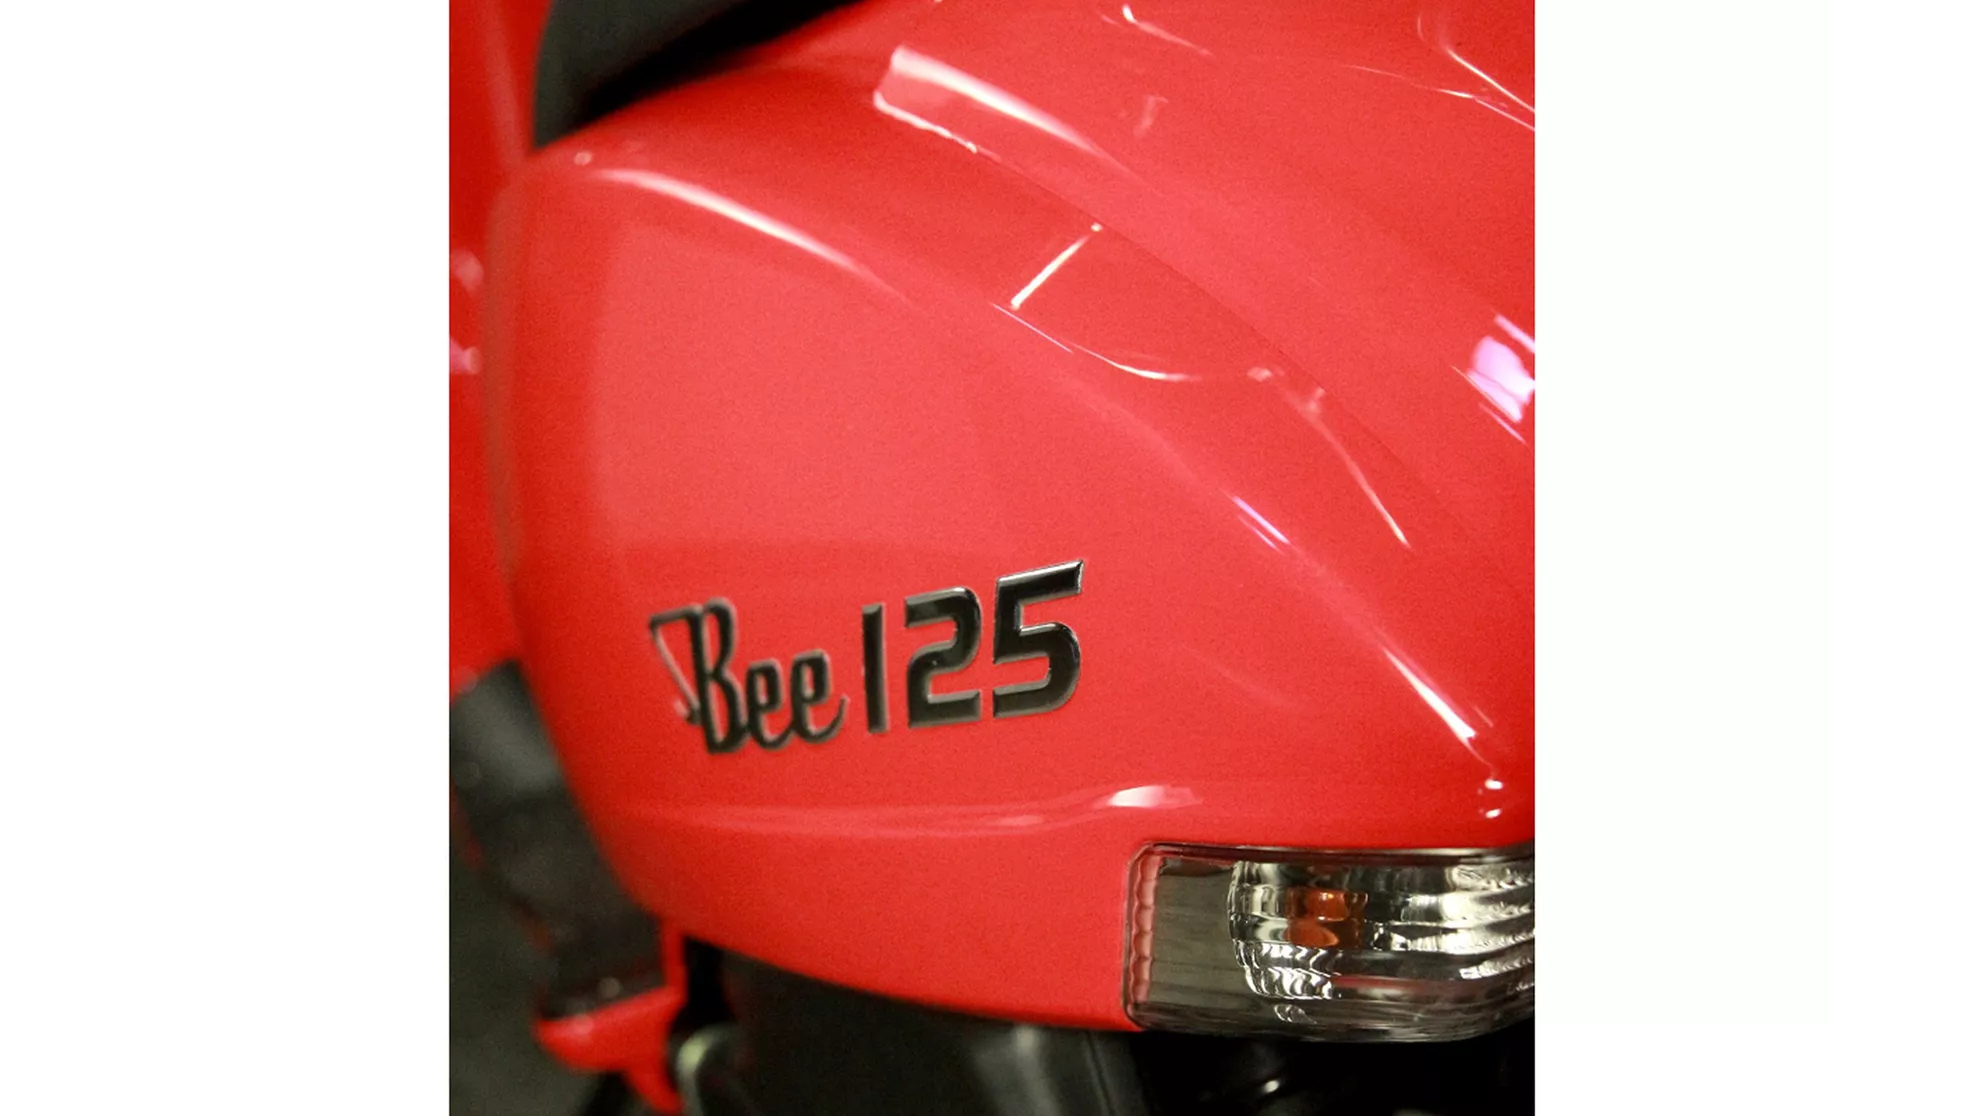 Sachs Bee 125 - Imagem 3